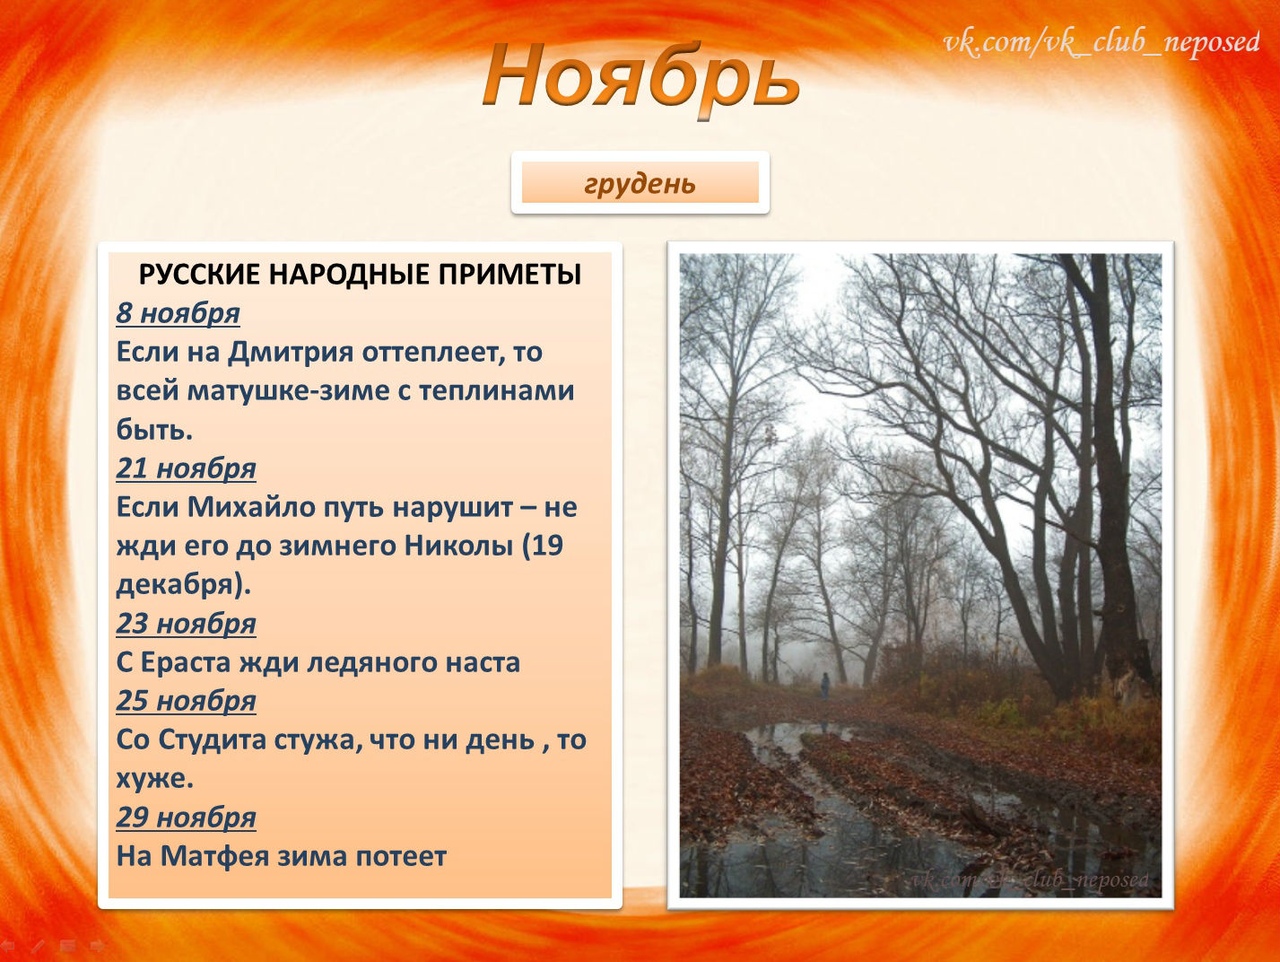 5dd0a92ec4f1d - Пословицы о погоде на русском